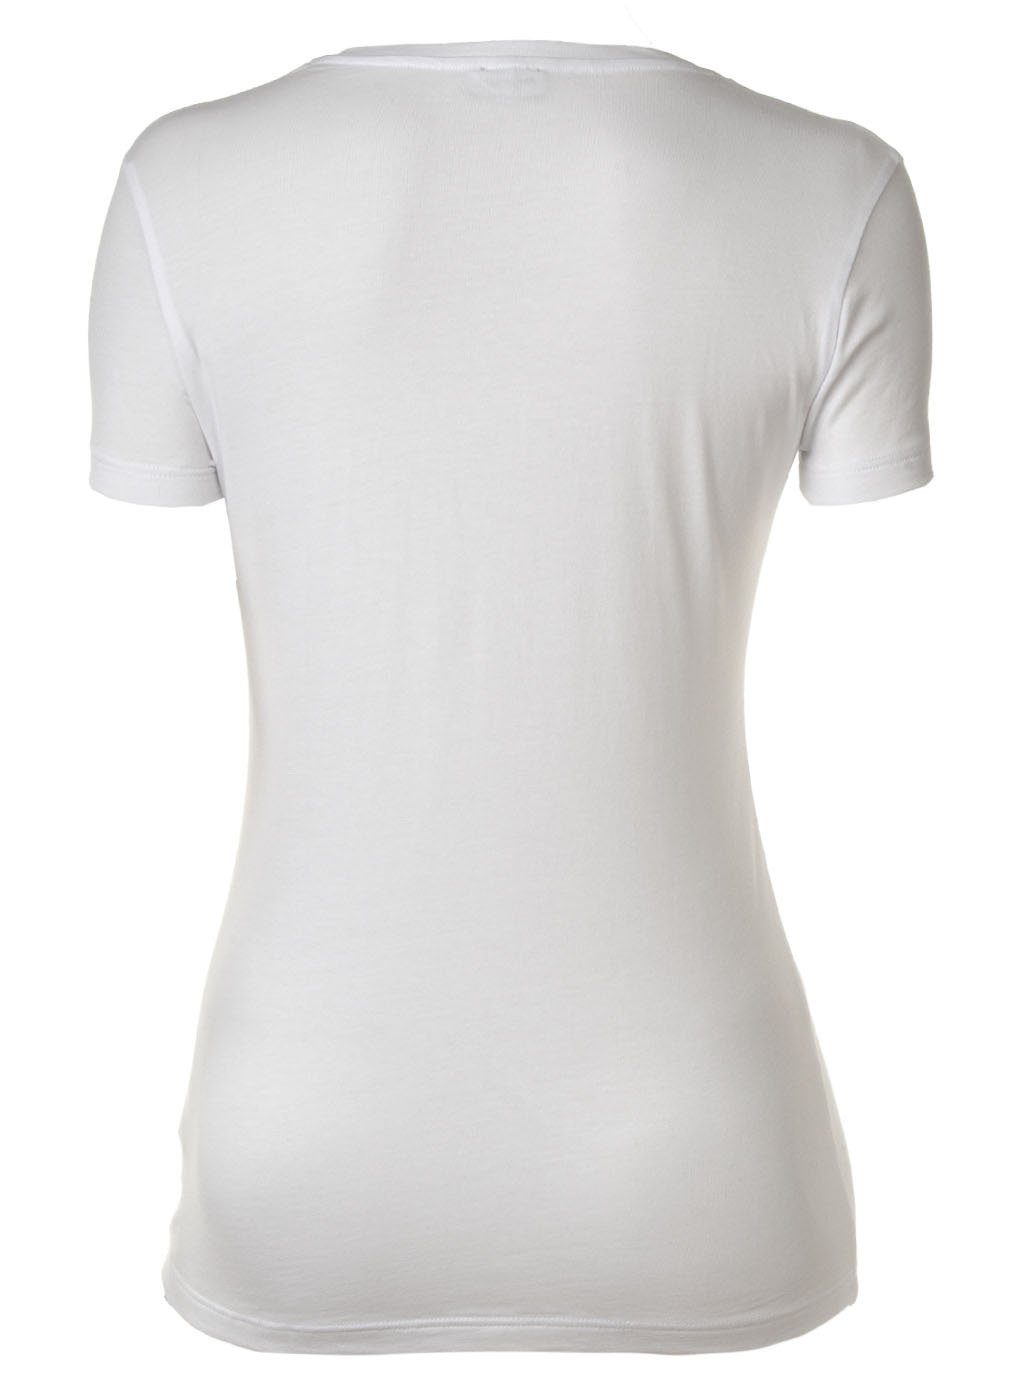 Kurzarm Damen Loungewear, T-Shirt - Emporio Armani T-Shirt Weiss Rundhals,